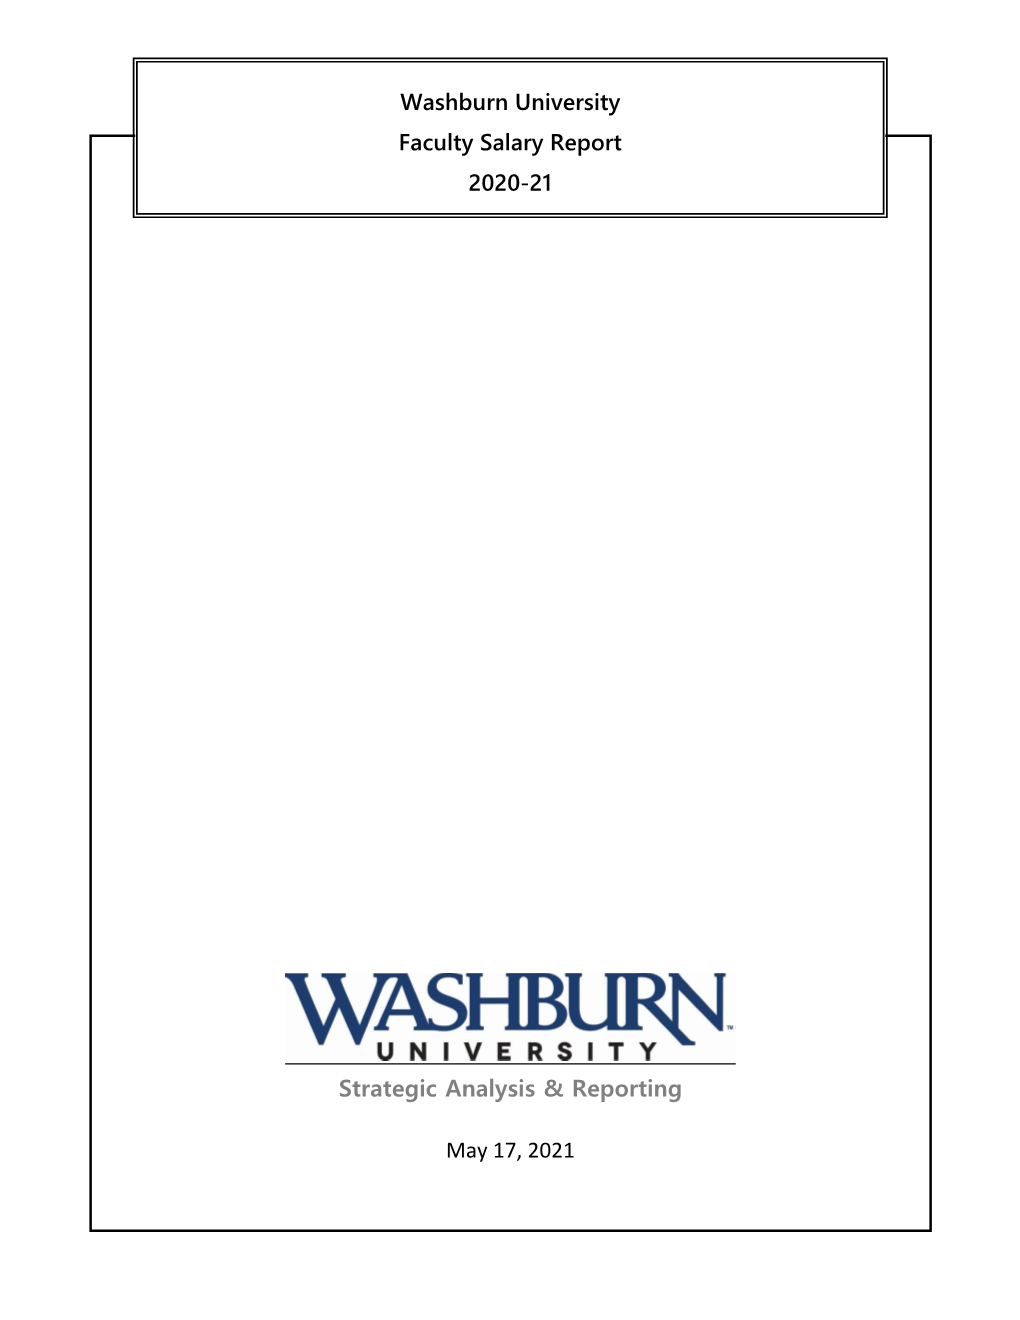 Washburn University Faculty Salary Report 2020-21